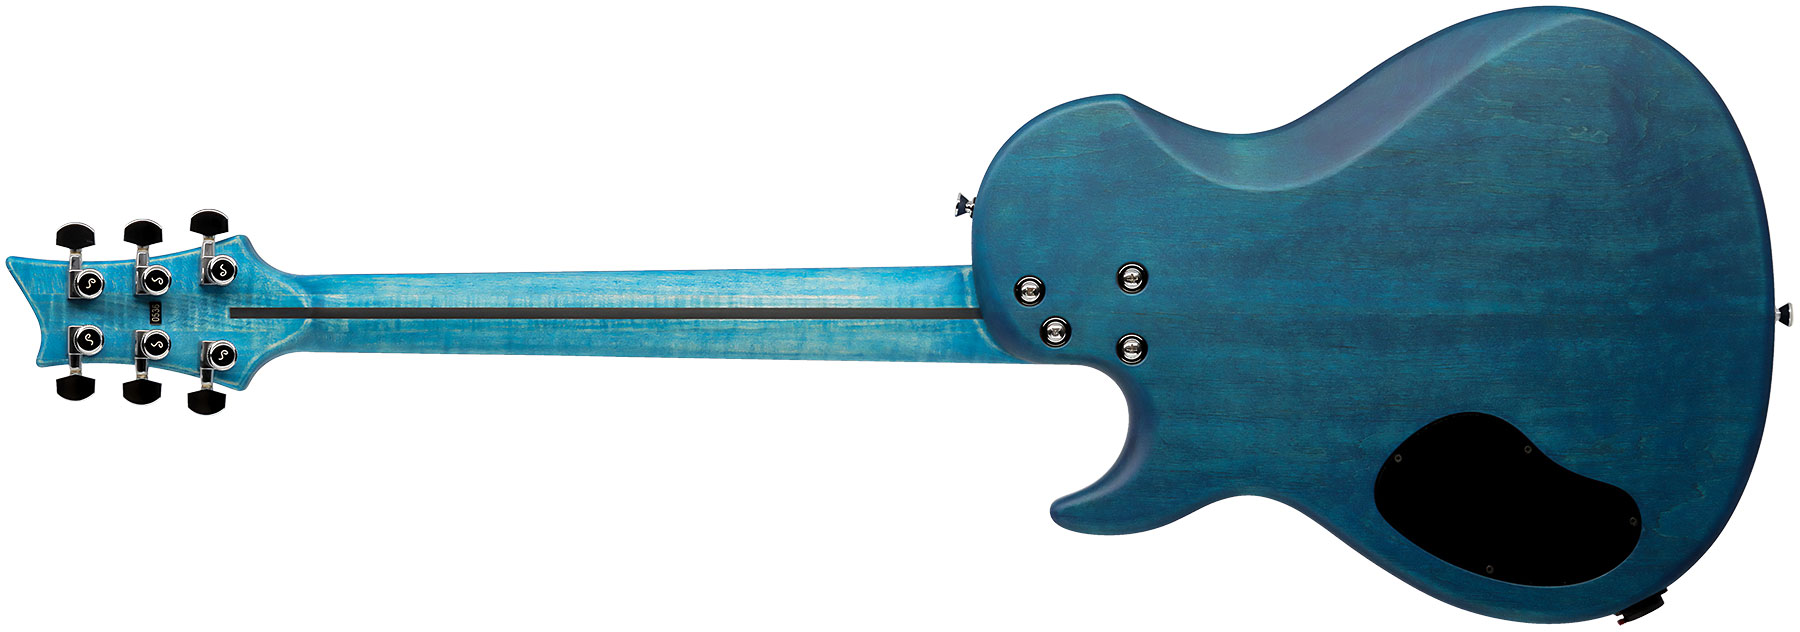 Vigier G.v. Wood 2h Ht Phe - Stonewash Blue Matt - Enkel gesneden elektrische gitaar - Variation 1